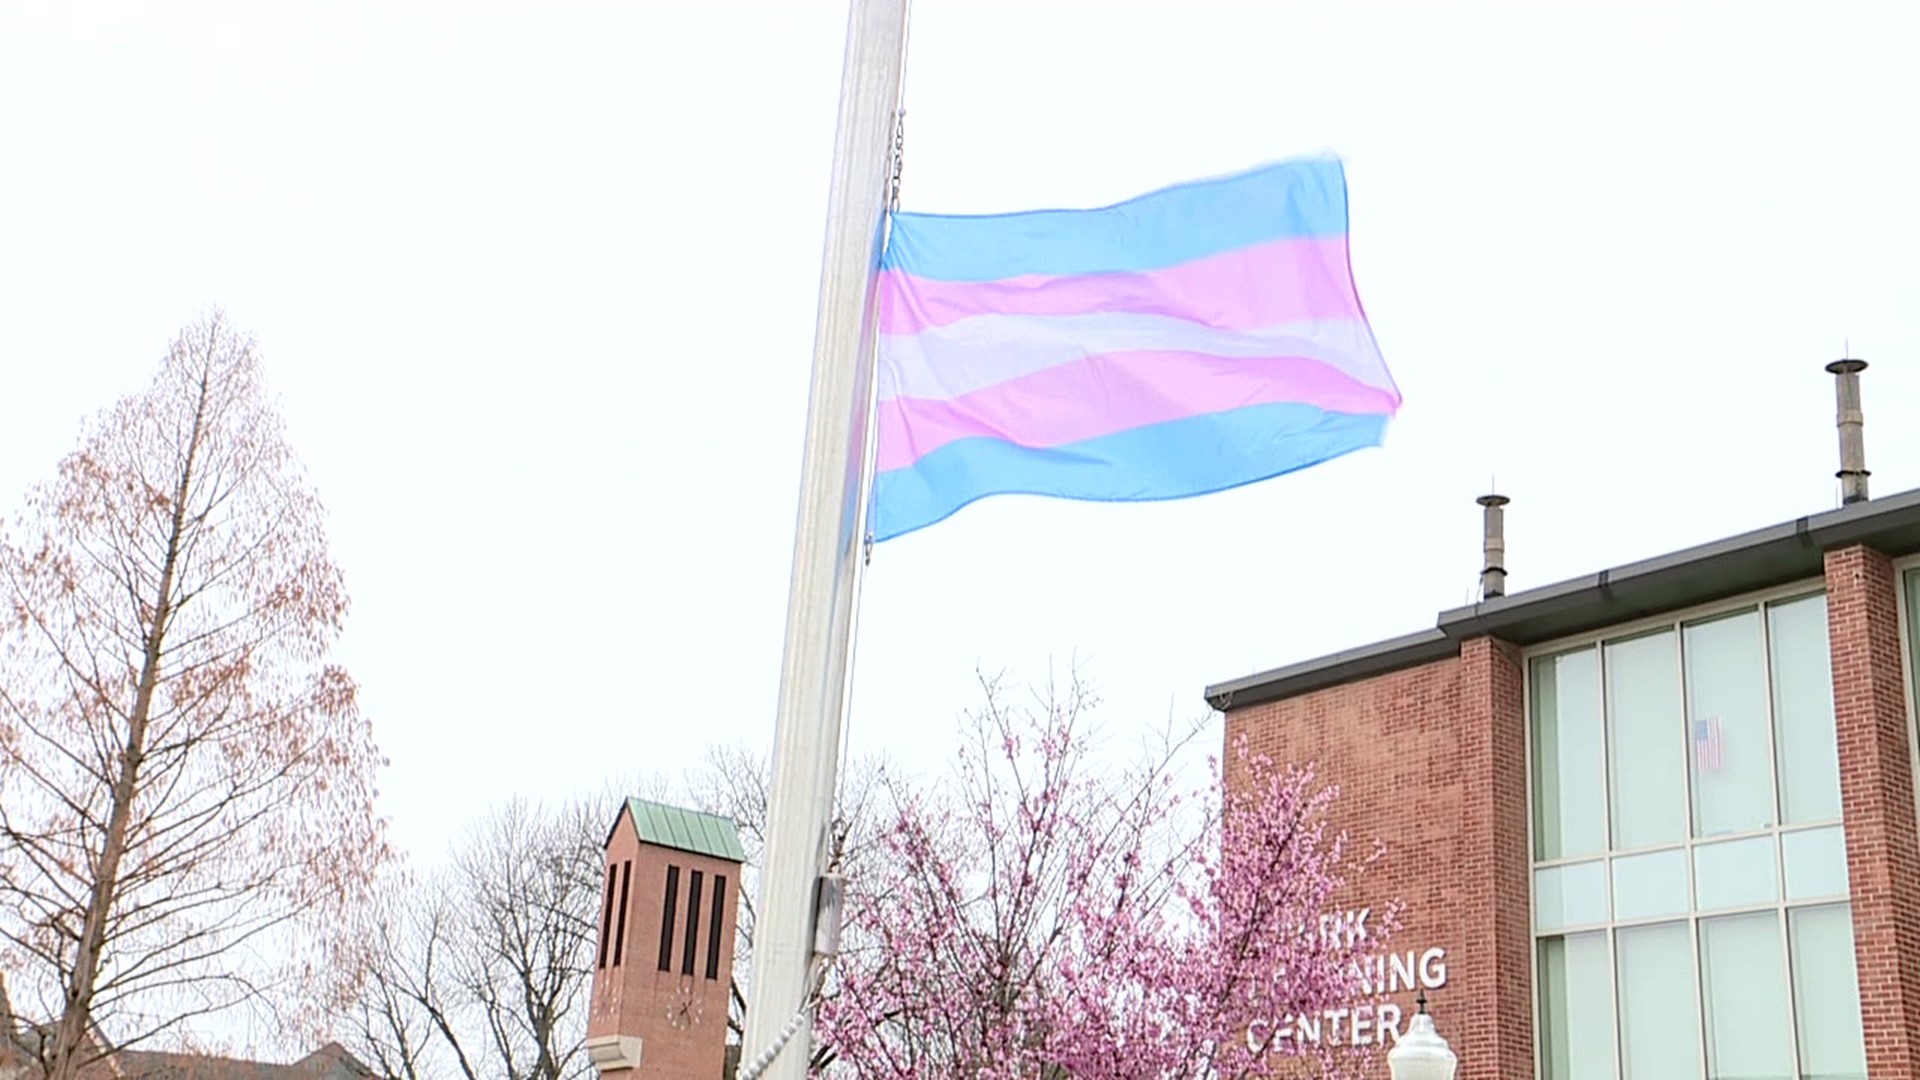 Wilkes University raised the Transgender Flag on campus.